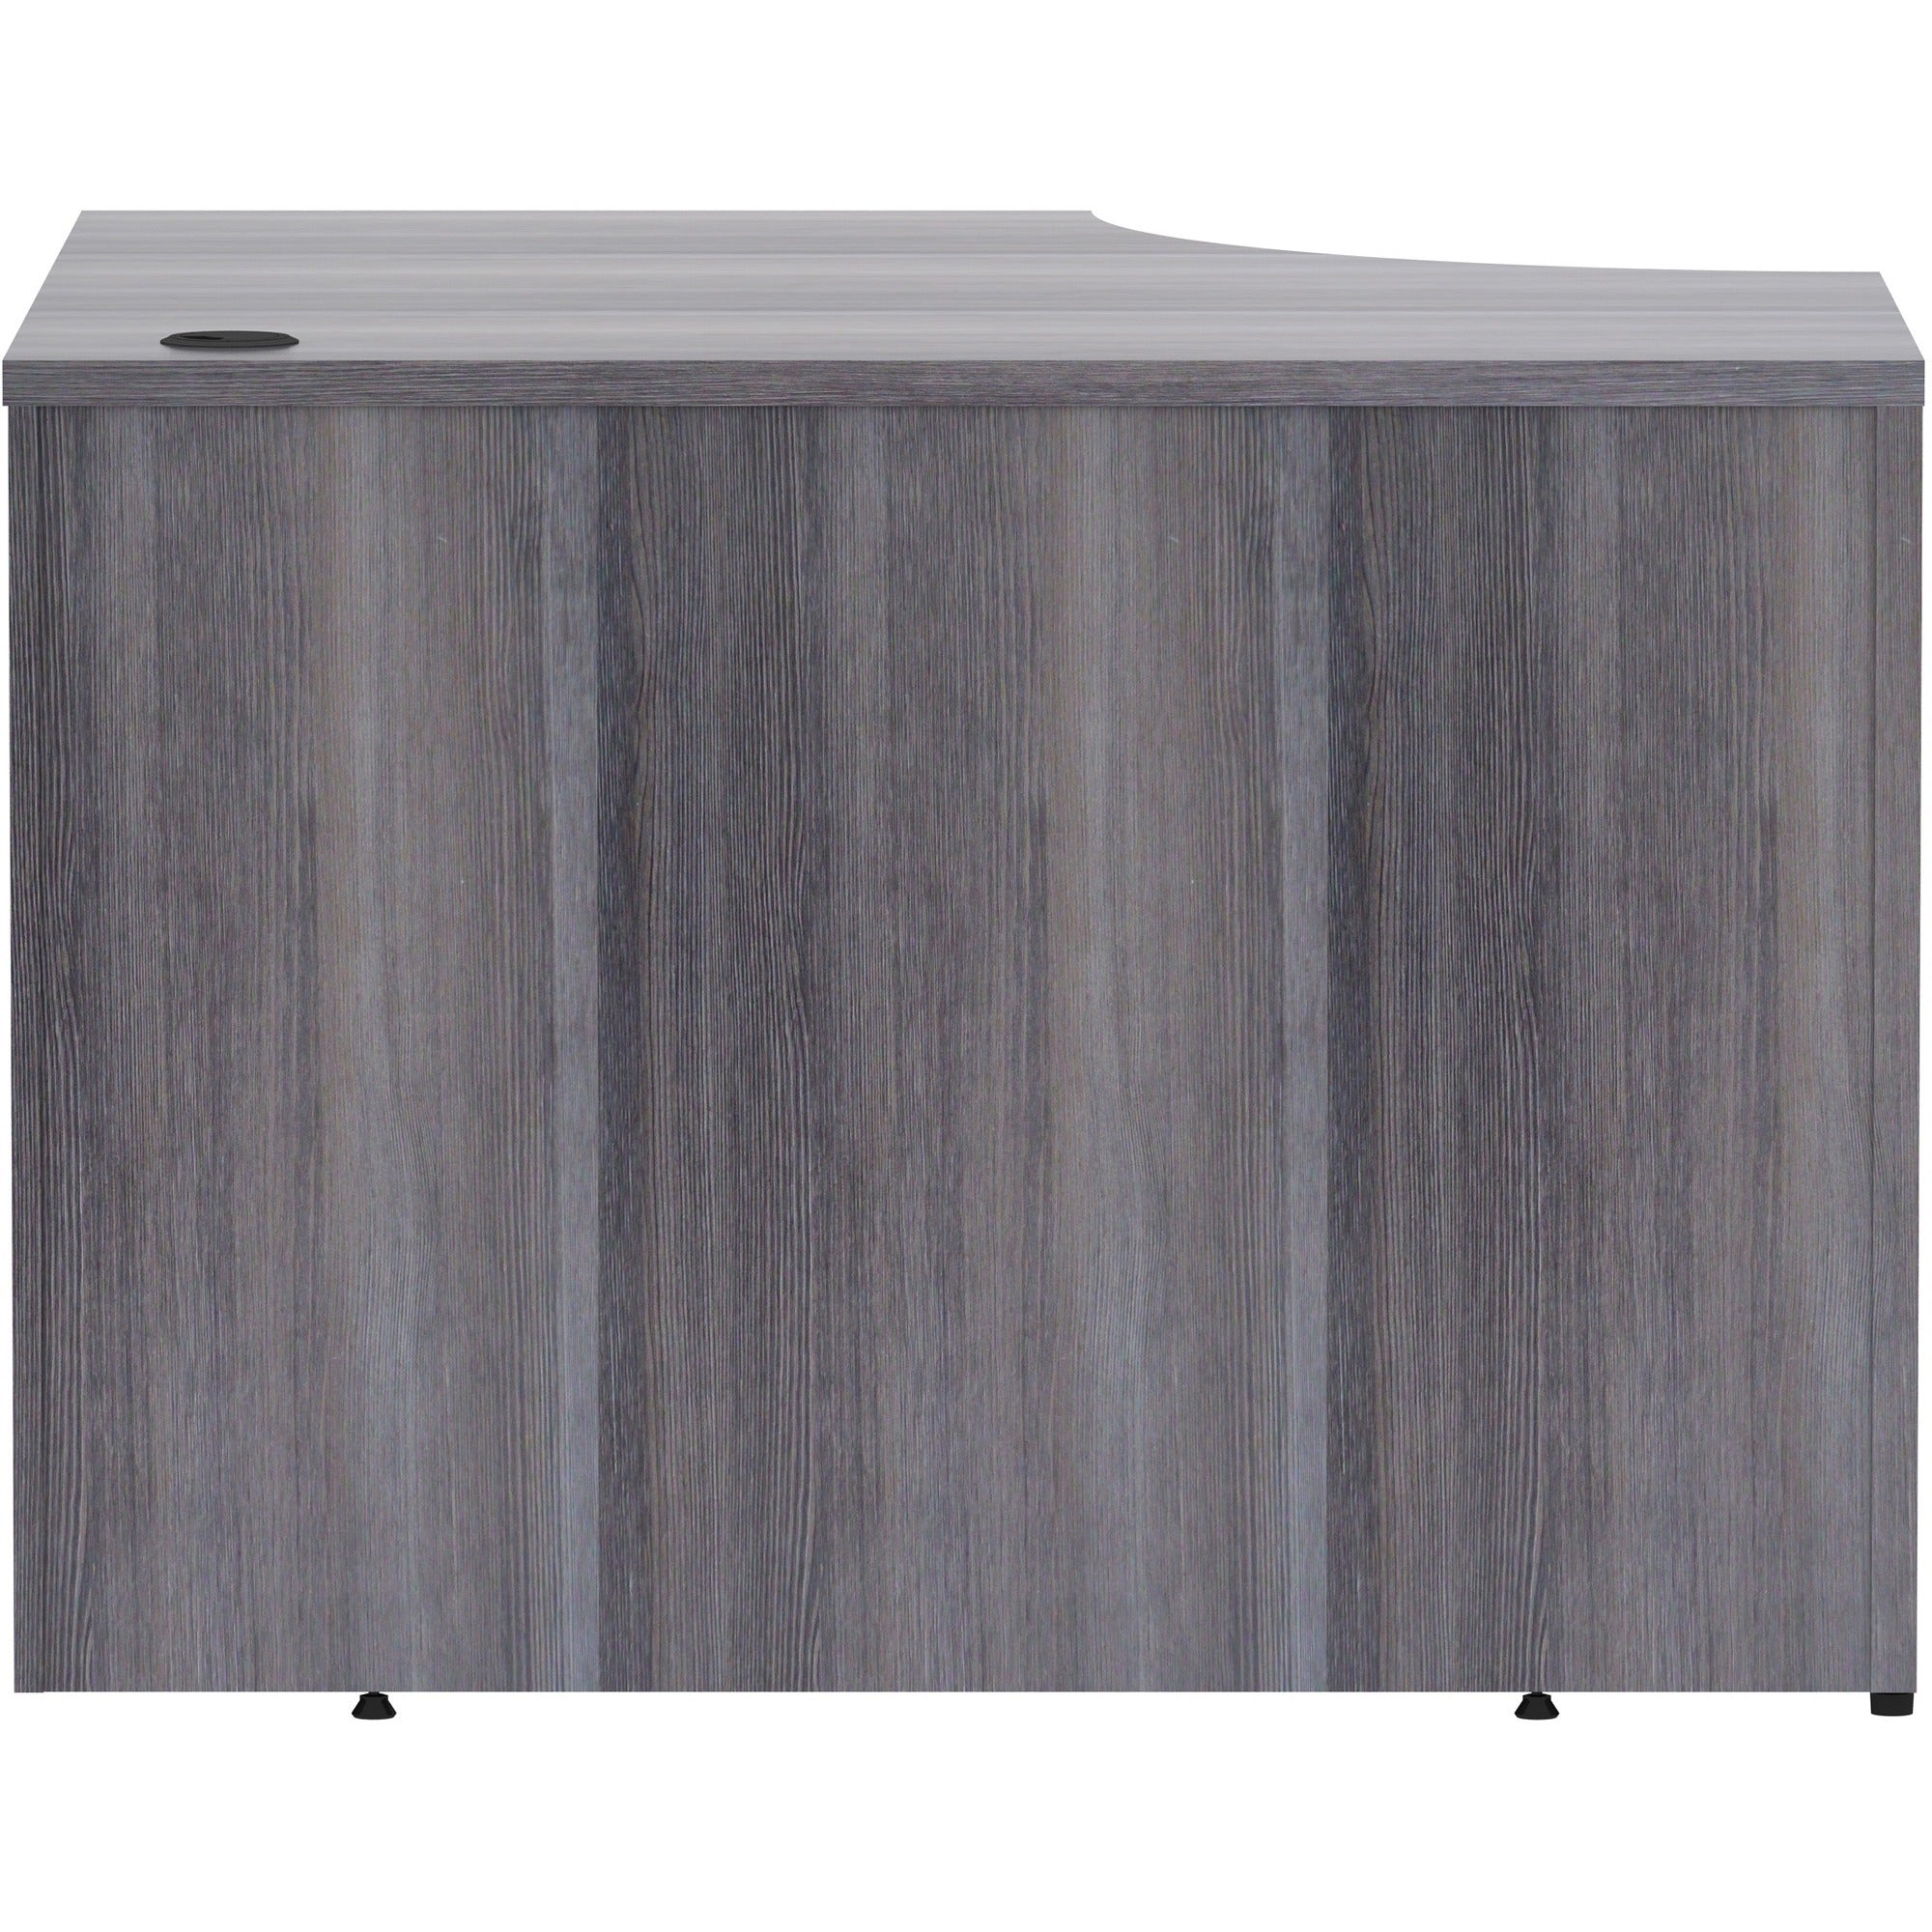 lorell-essentials-series-corner-desk-42-x-24295-desk-1-top-finish-weathered-charcoal-laminate_llr69592 - 3